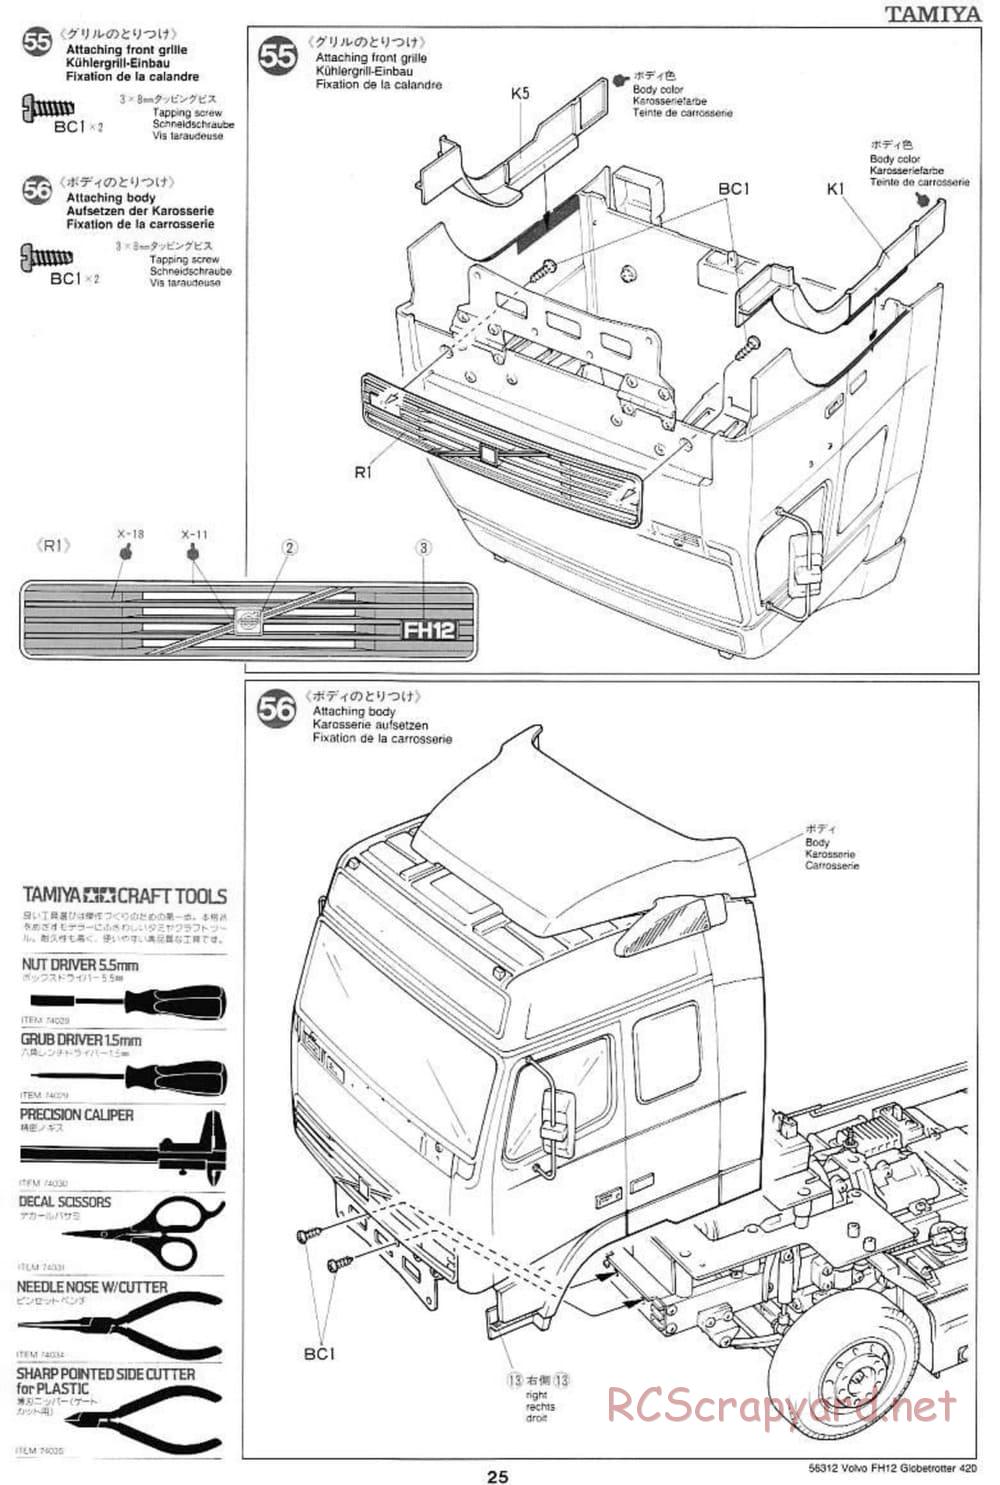 Tamiya - Volvo FH12 Globetrotter 420 - Manual - Page 25